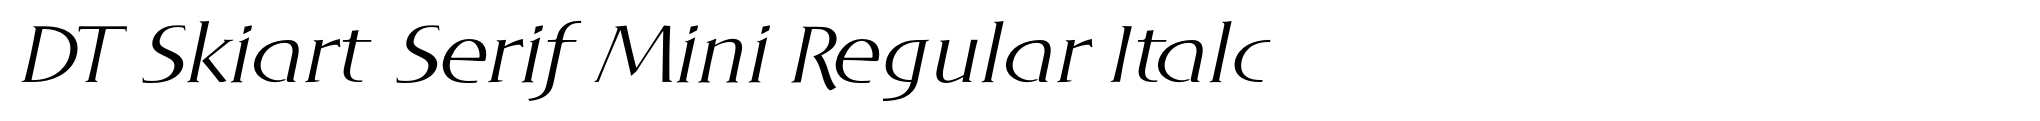 DT Skiart Serif Mini Regular Italc image